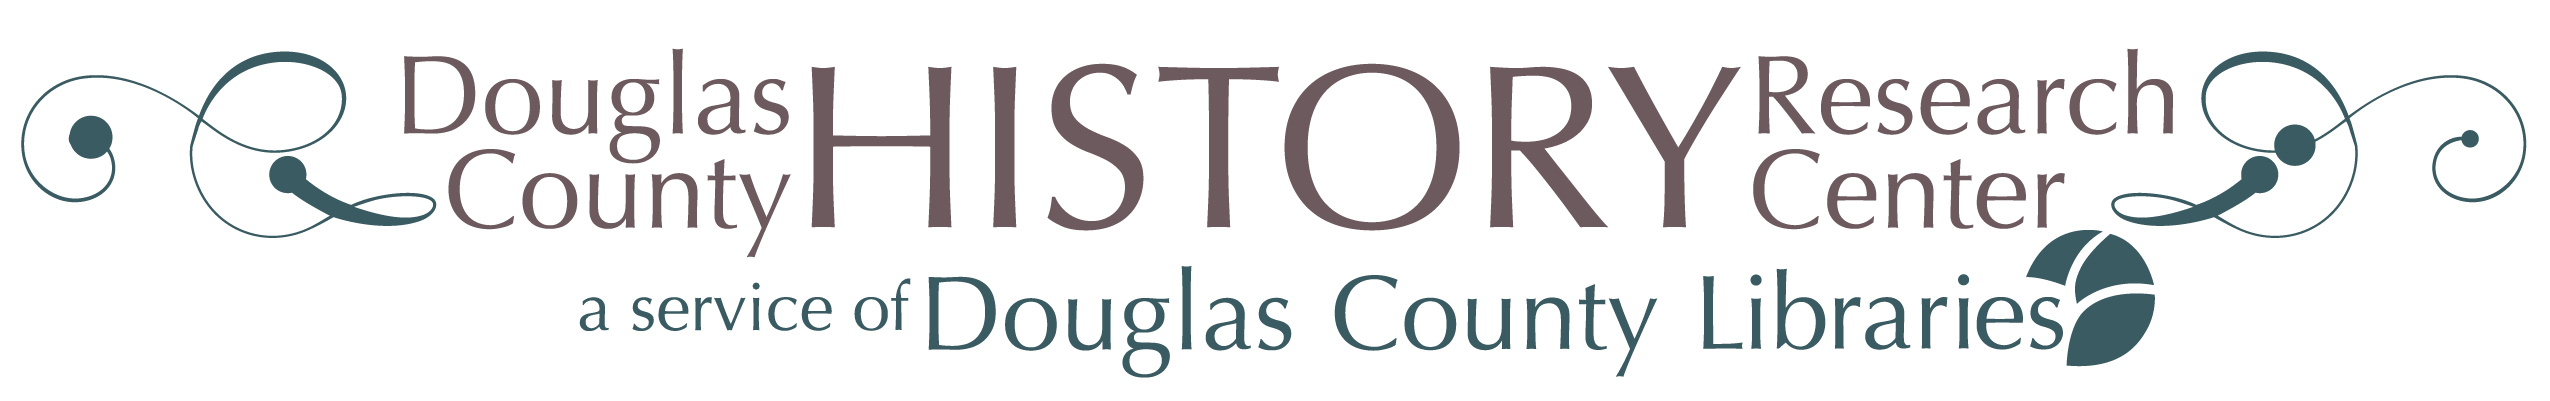 Douglas County History Research Center logo